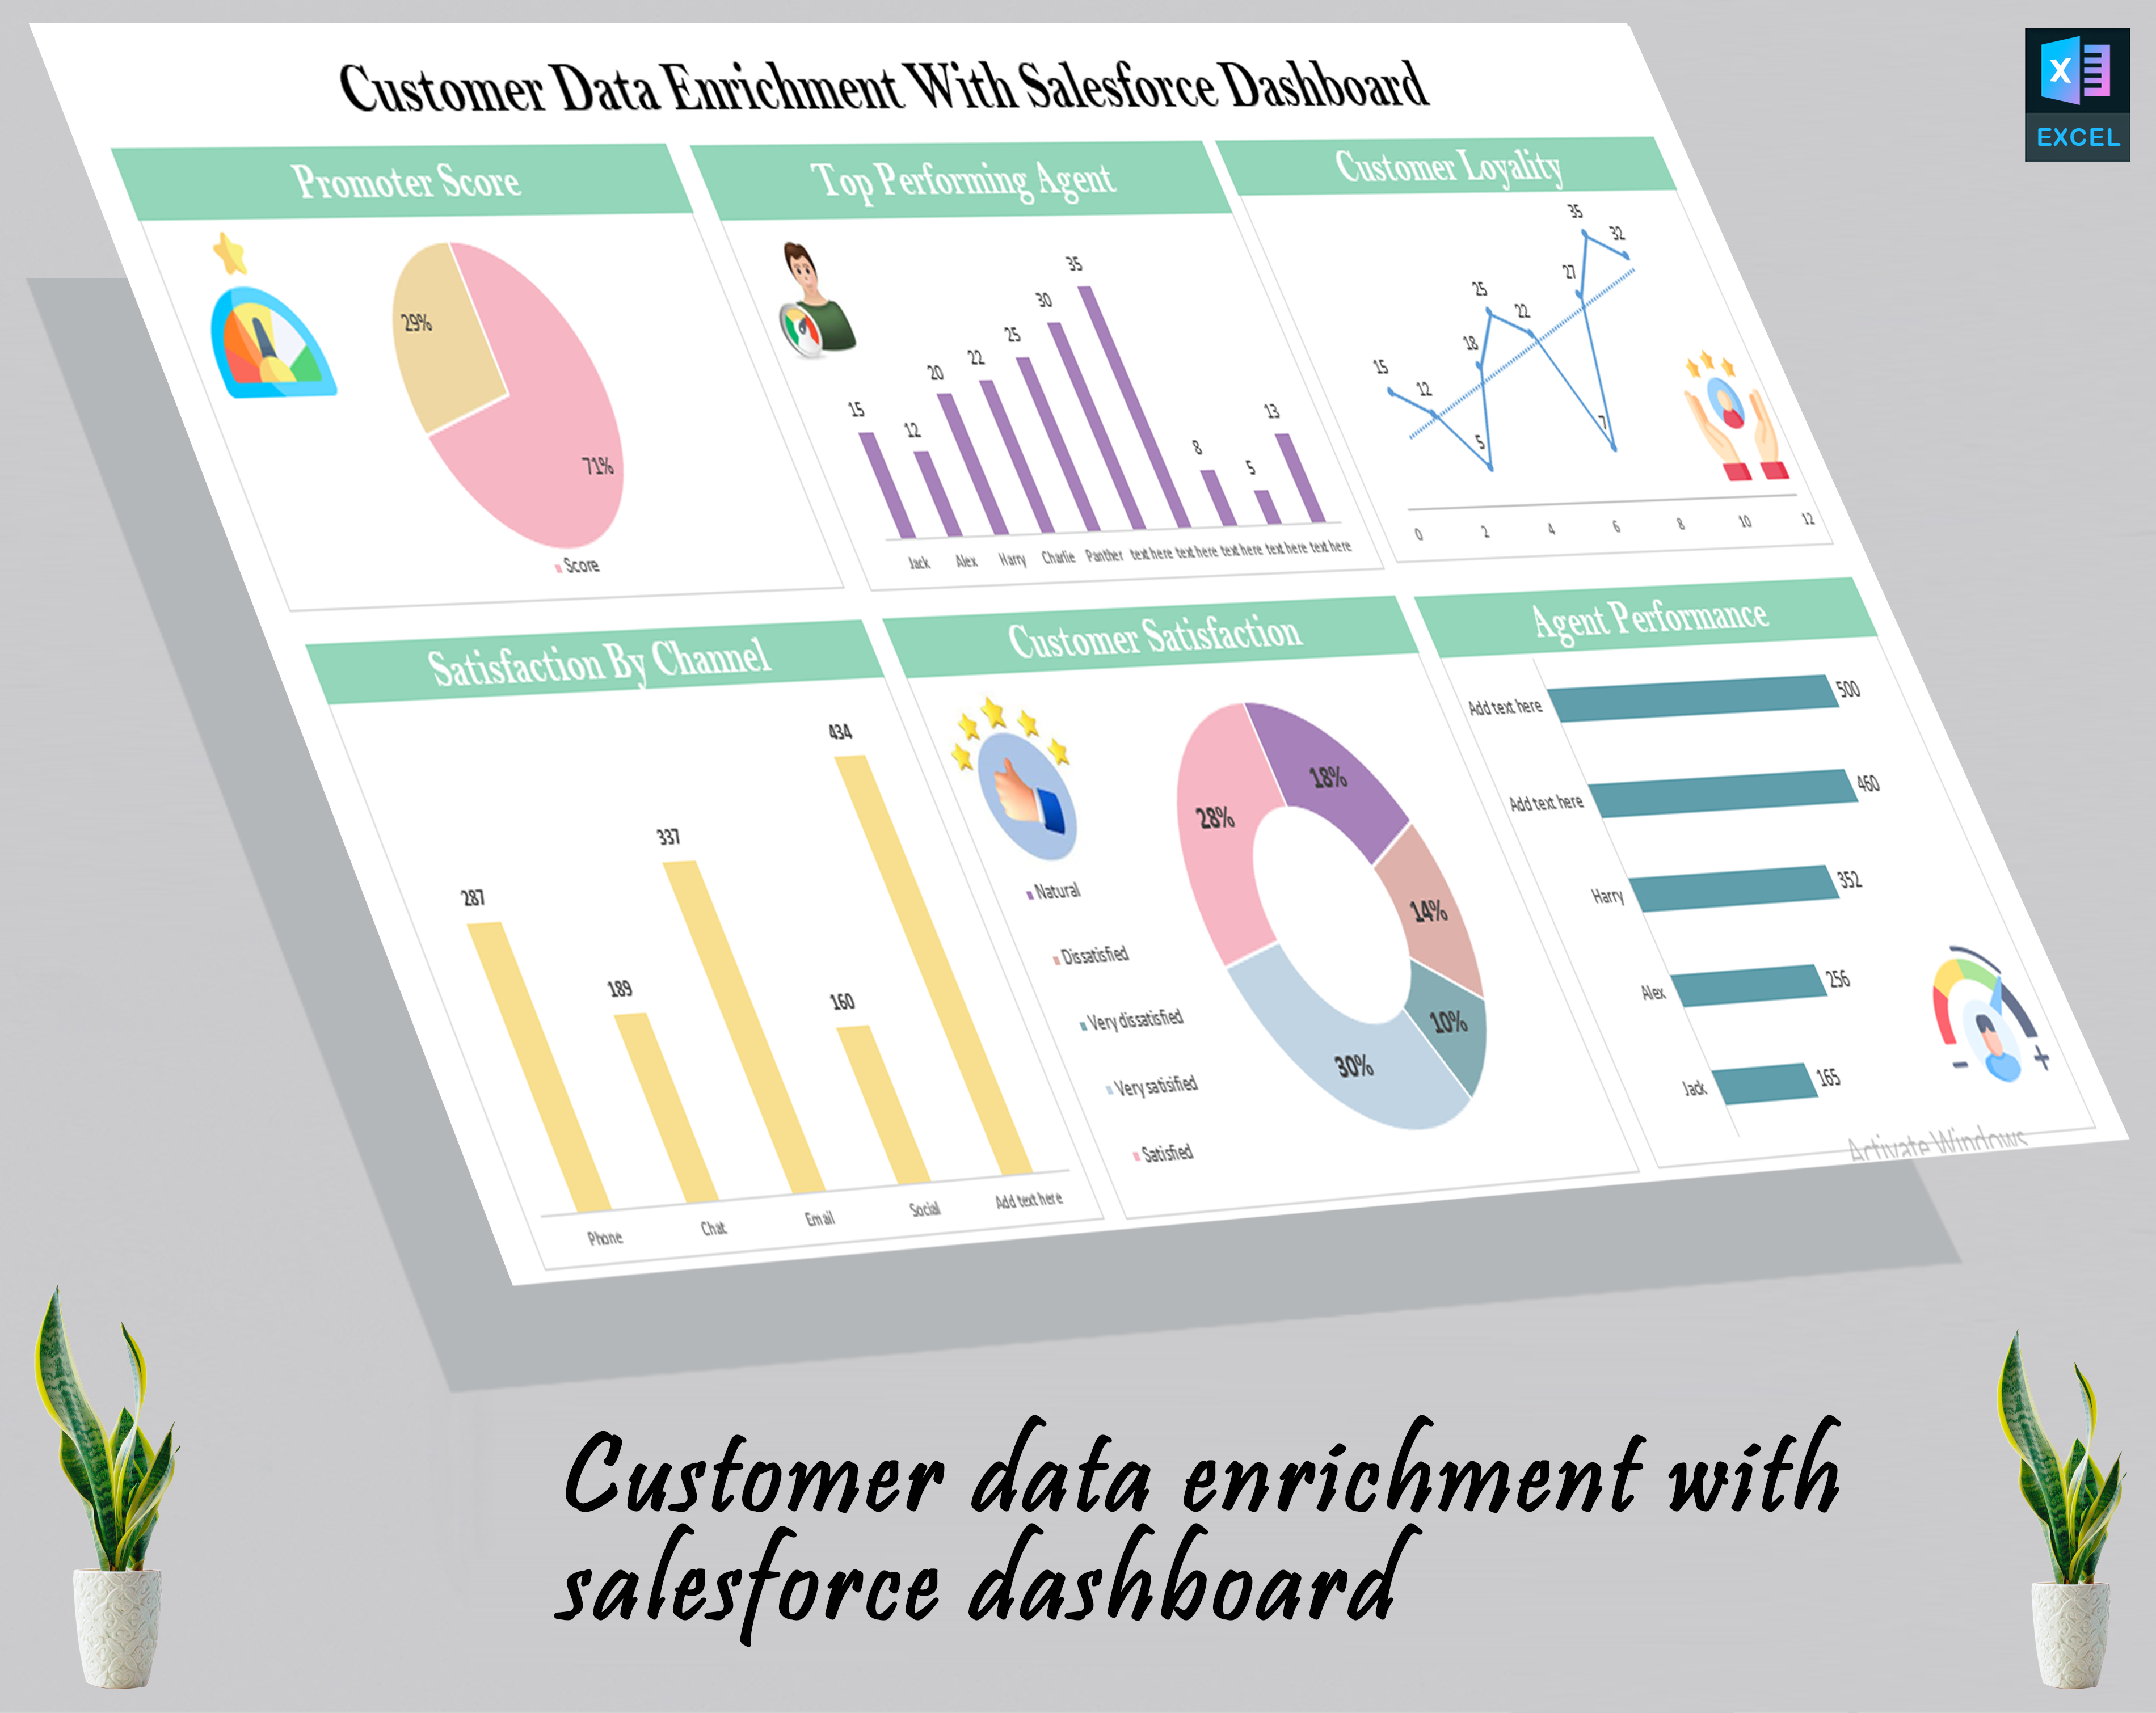 Customer data enrichment with salesforce dashboard